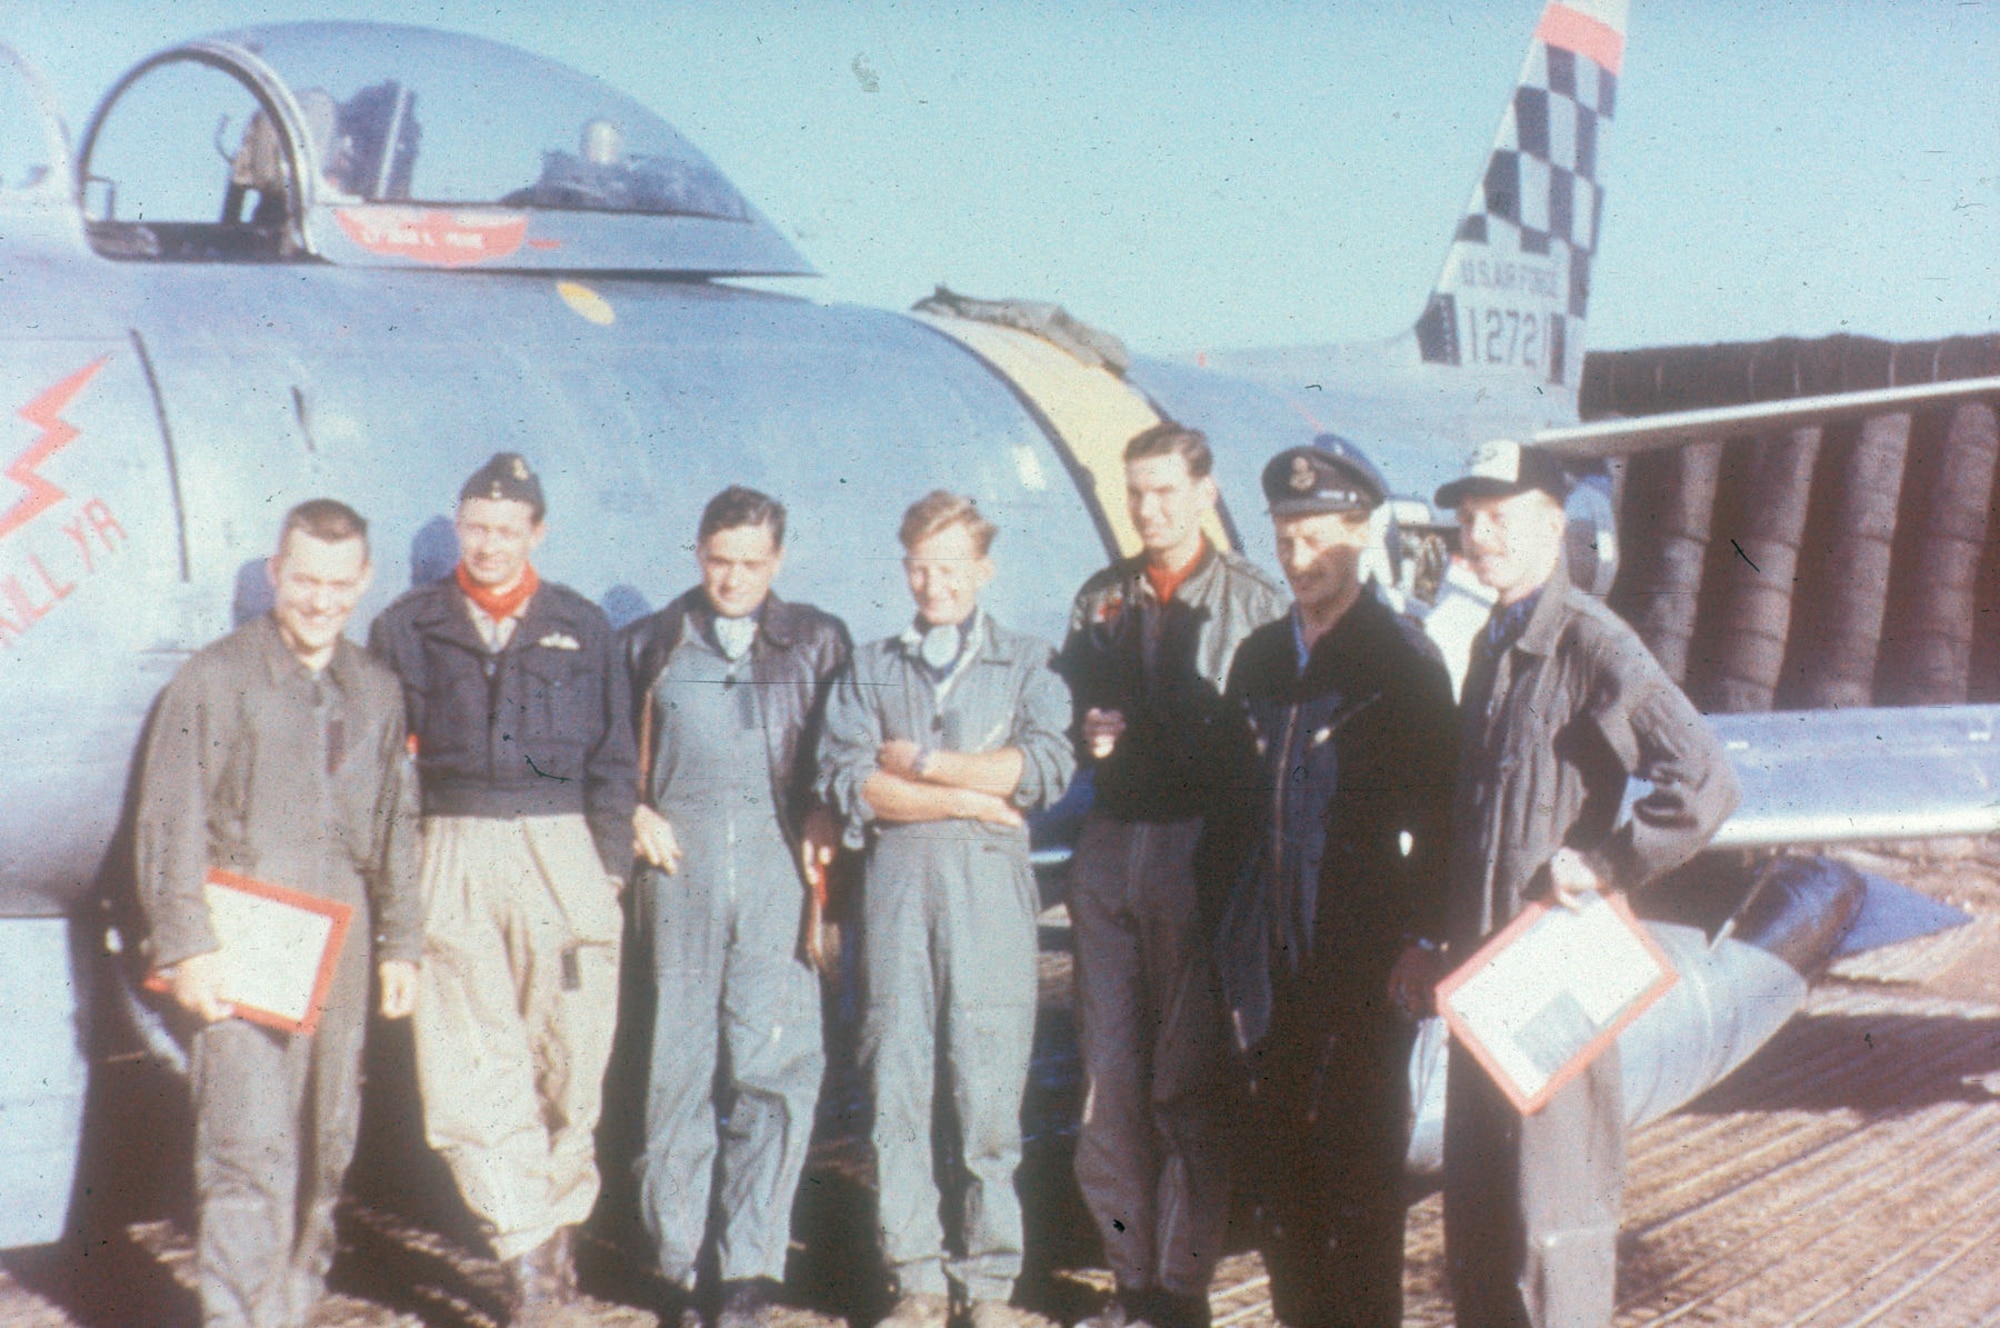 F-86 fighter pilots at Suwon Air Base in Korea. (U.S. Air Force photo)